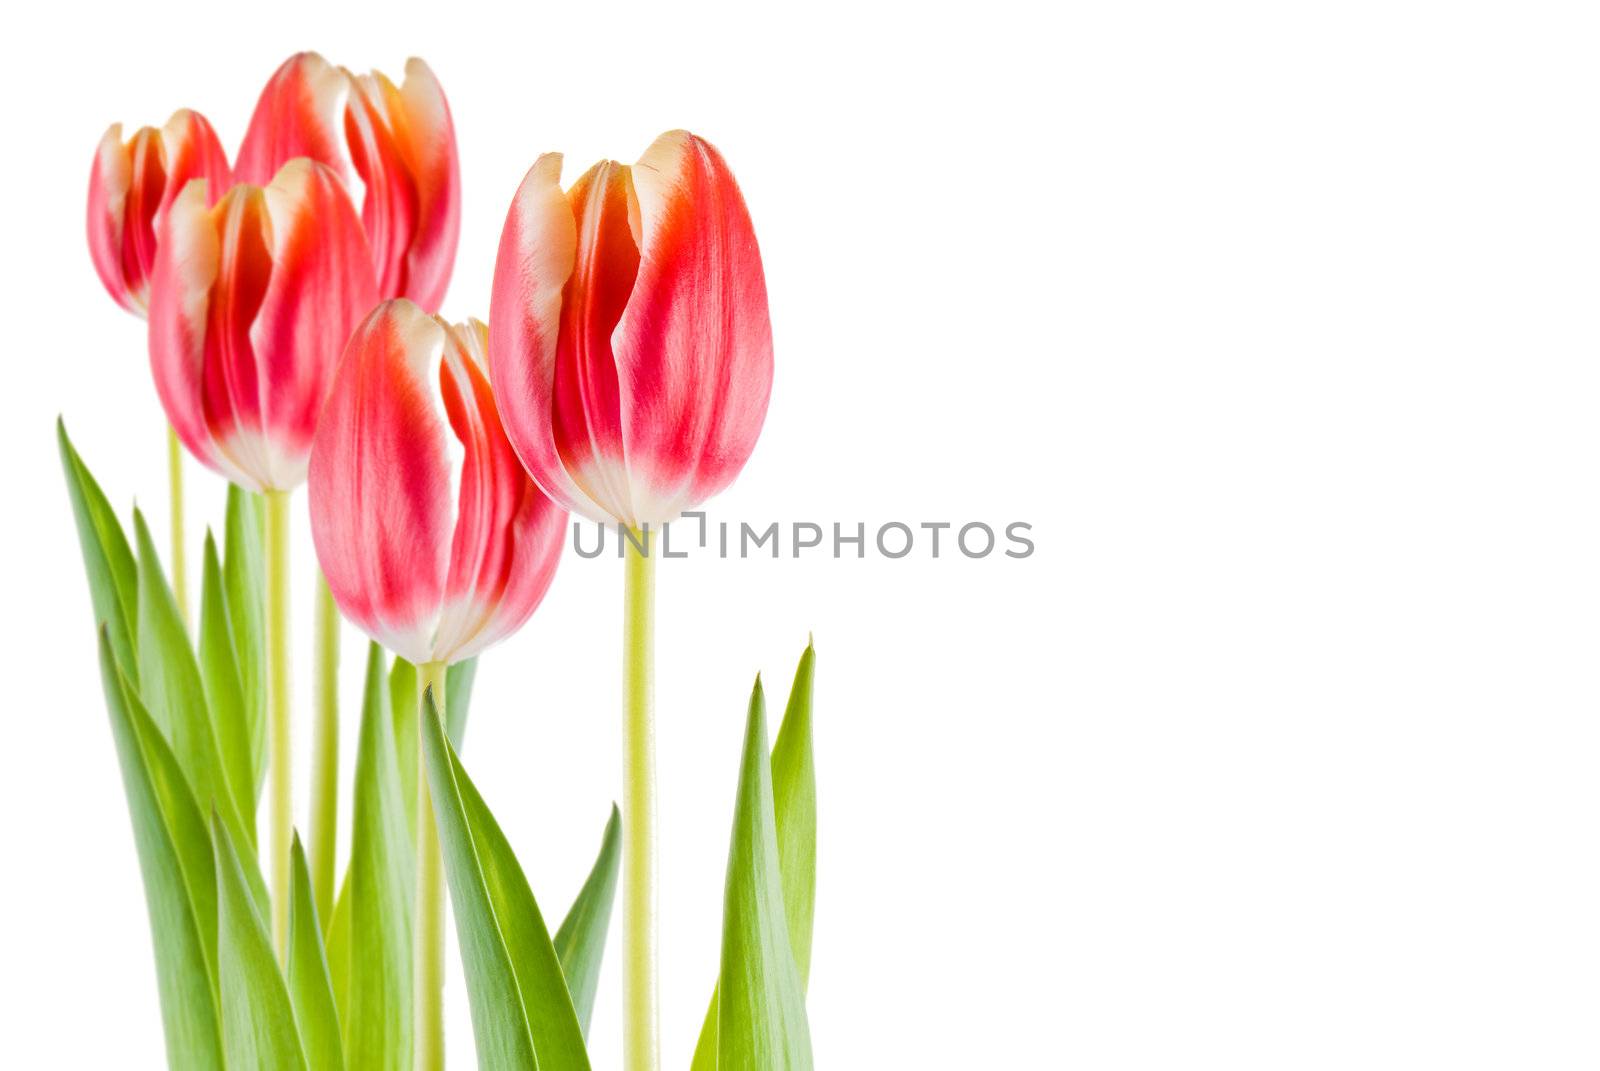 Tulips by caldix